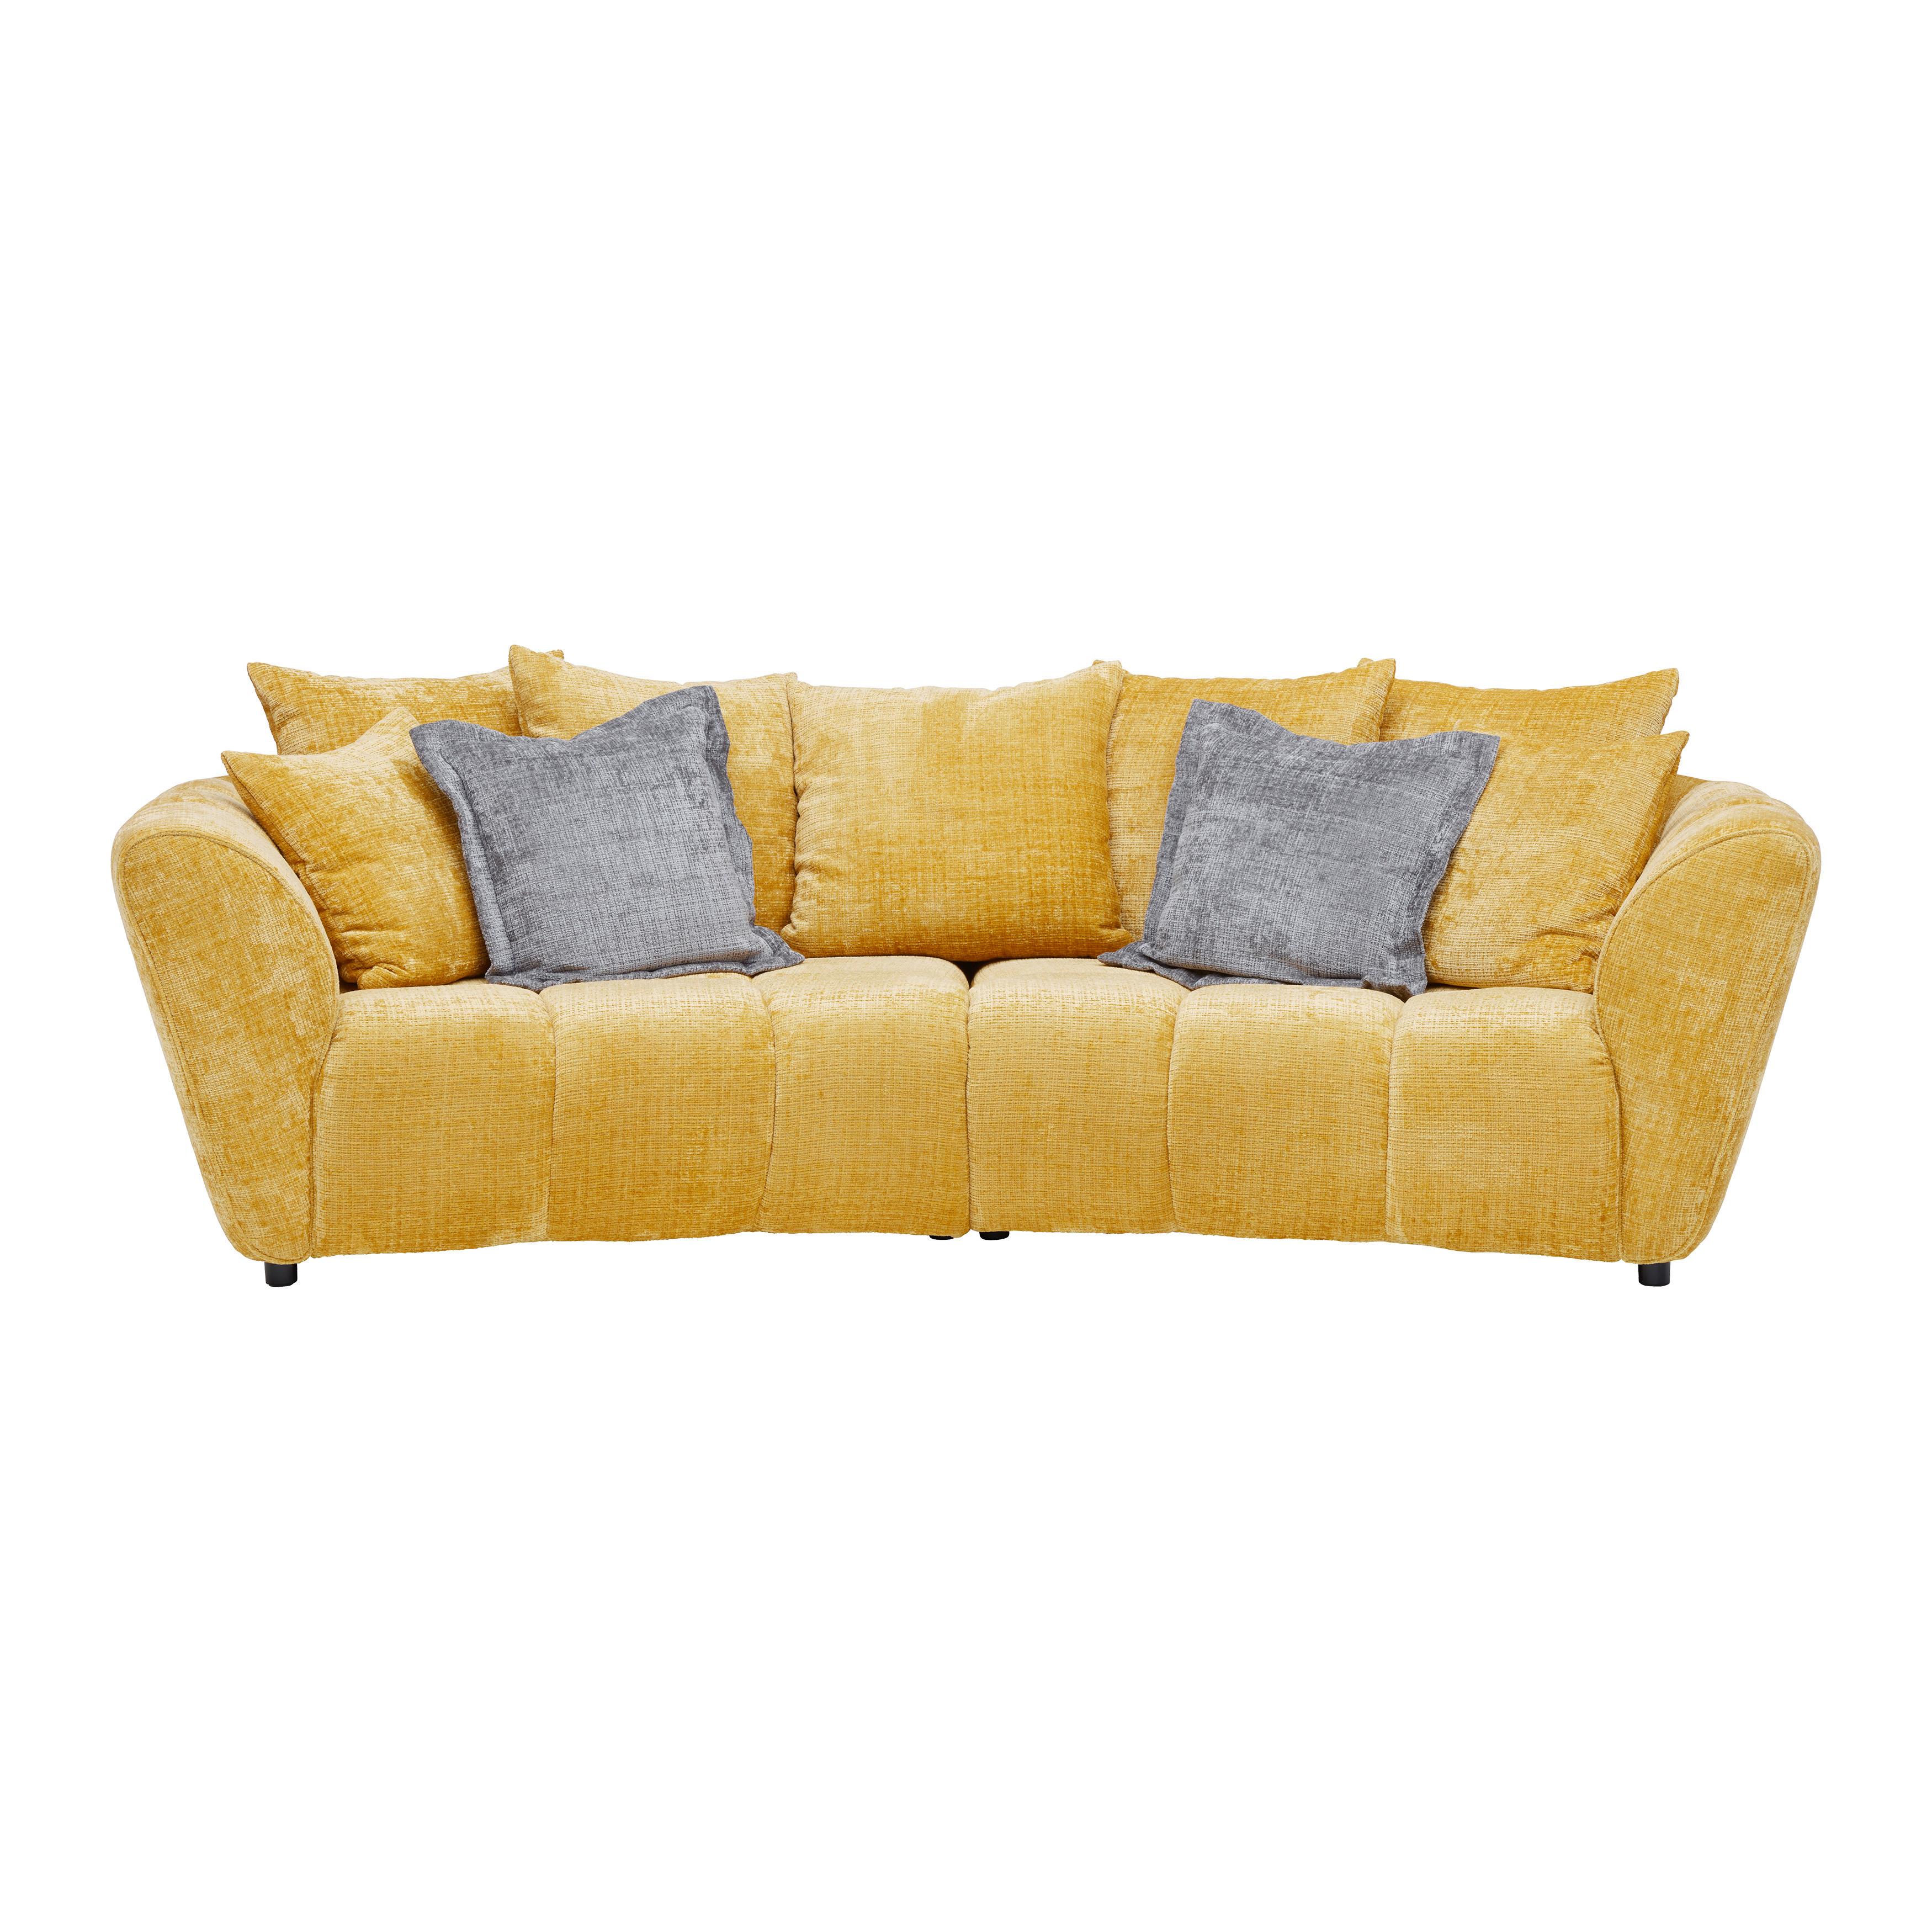 Bigsofa Bonelli in Gelb - Taupe/Gelb, Modern, Kunststoff/Textil (280/74/120cm) - Modern Living